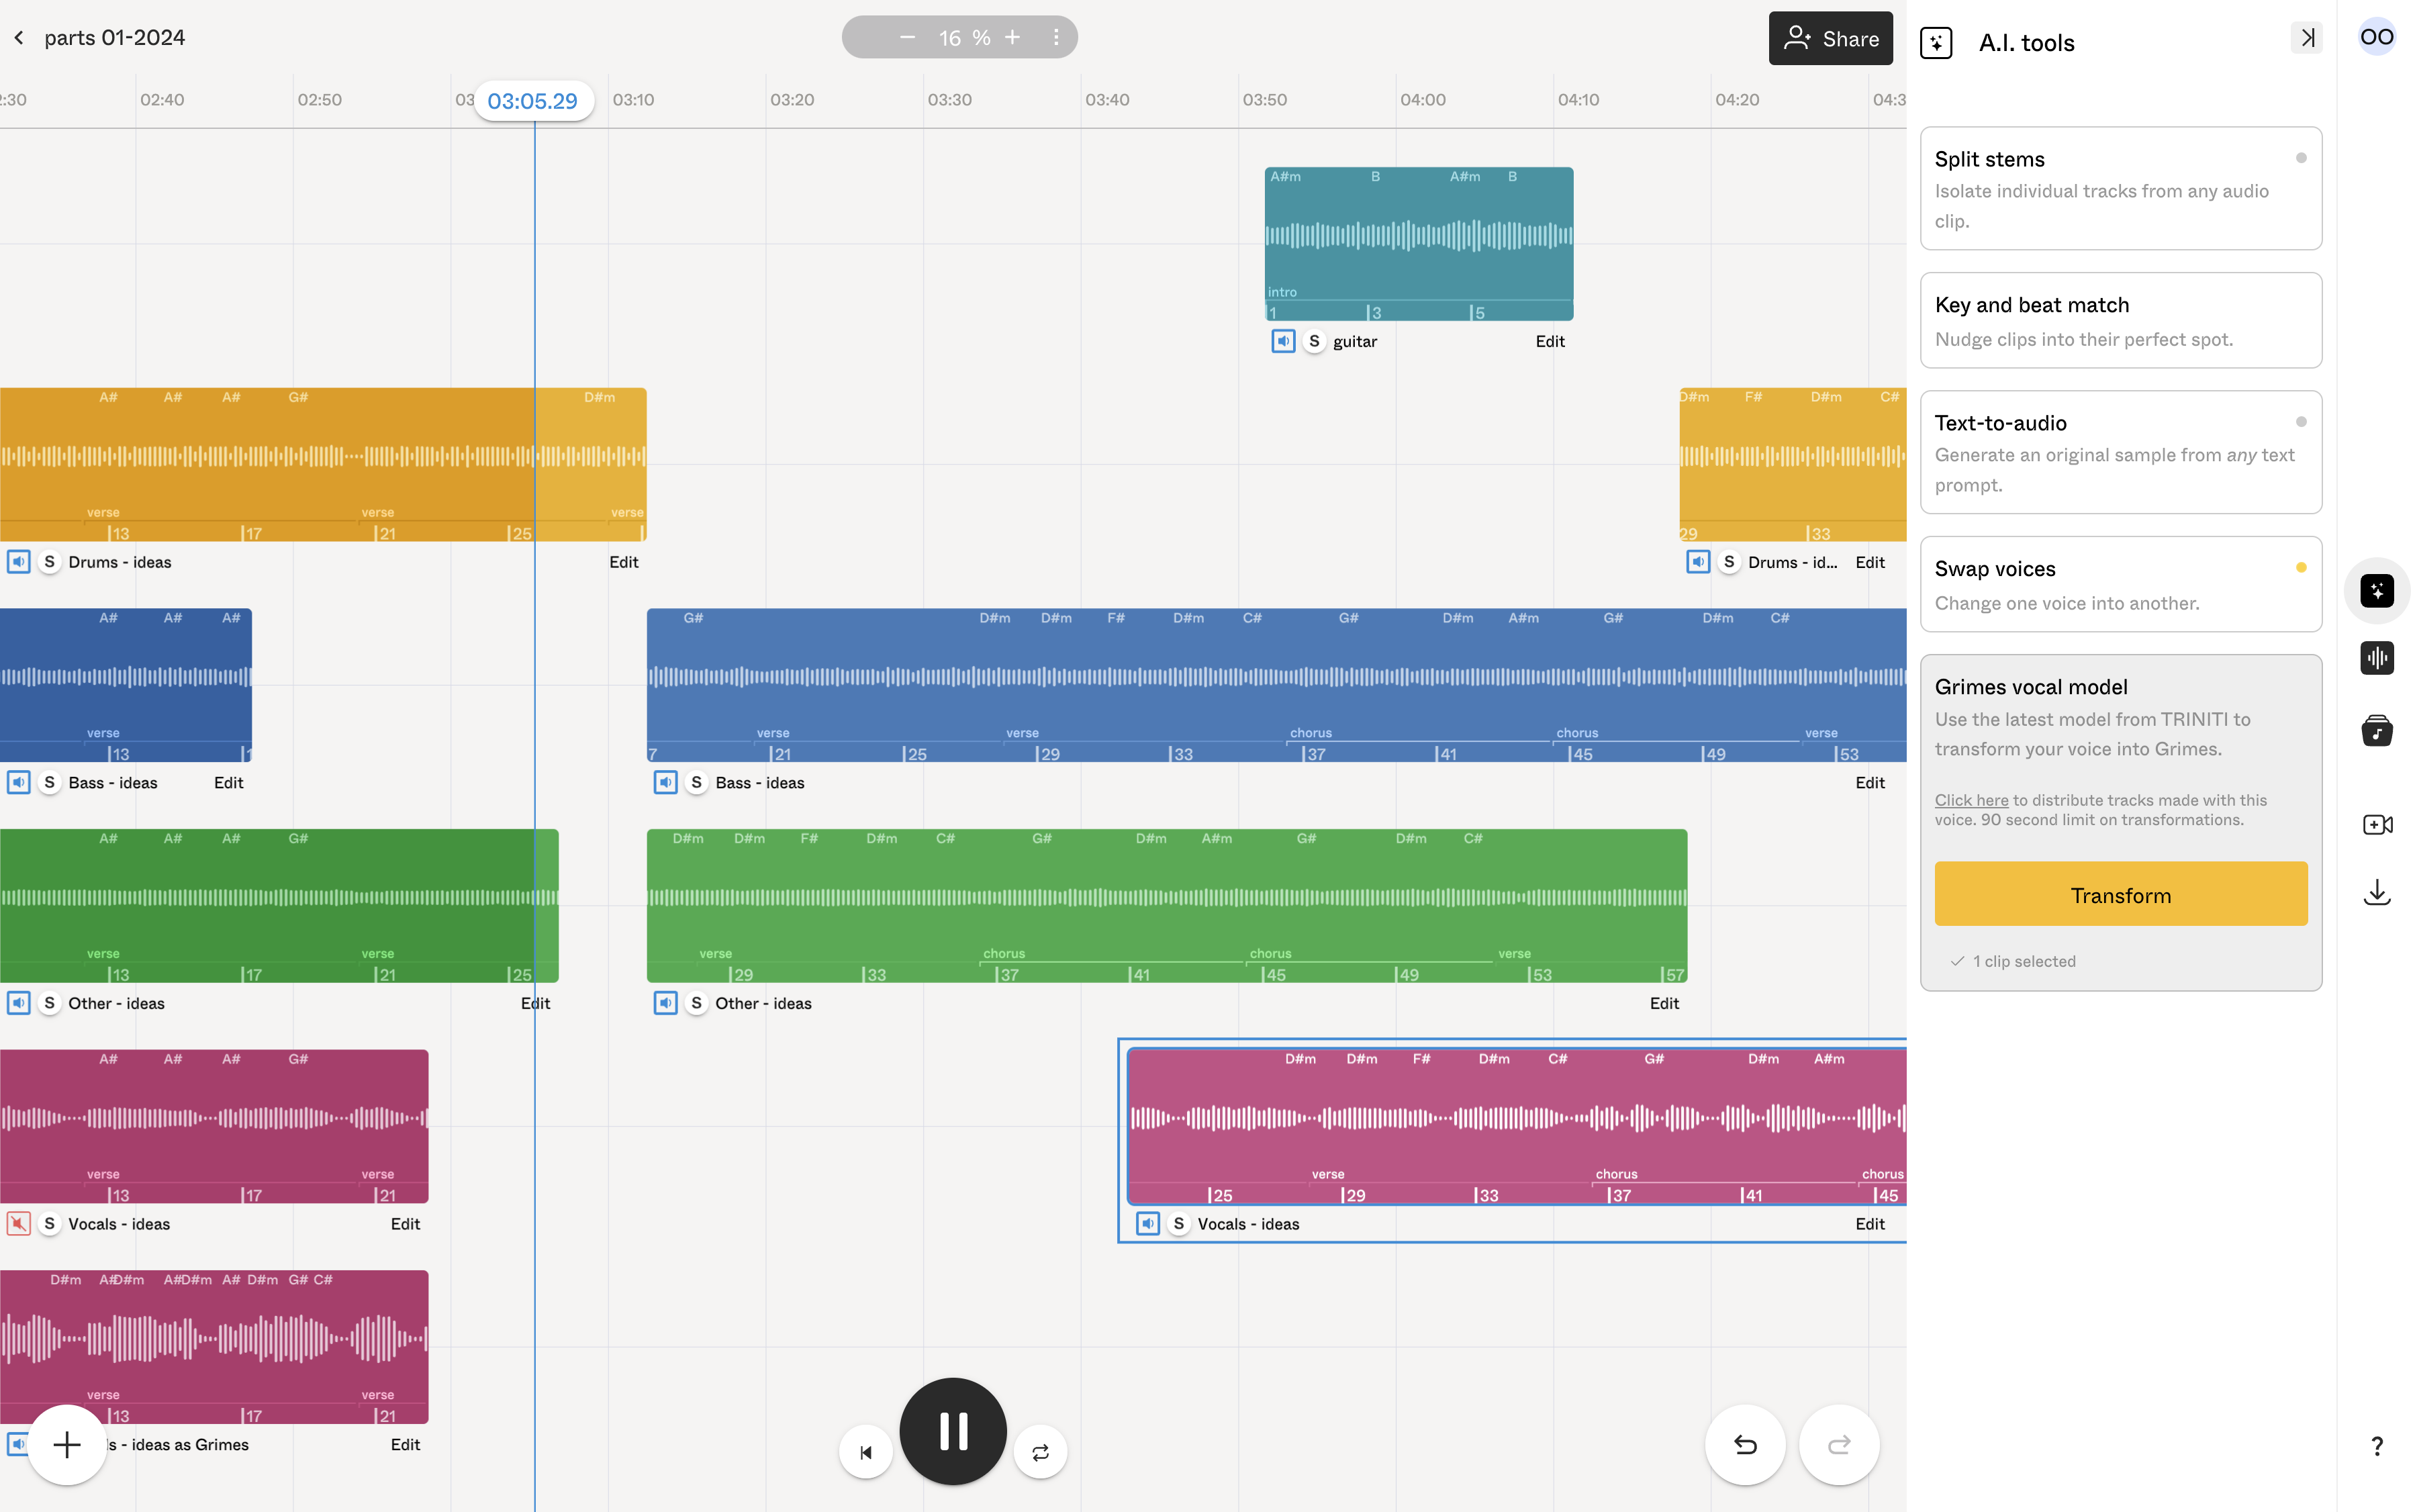 Sounds.Studio – Main timeline view